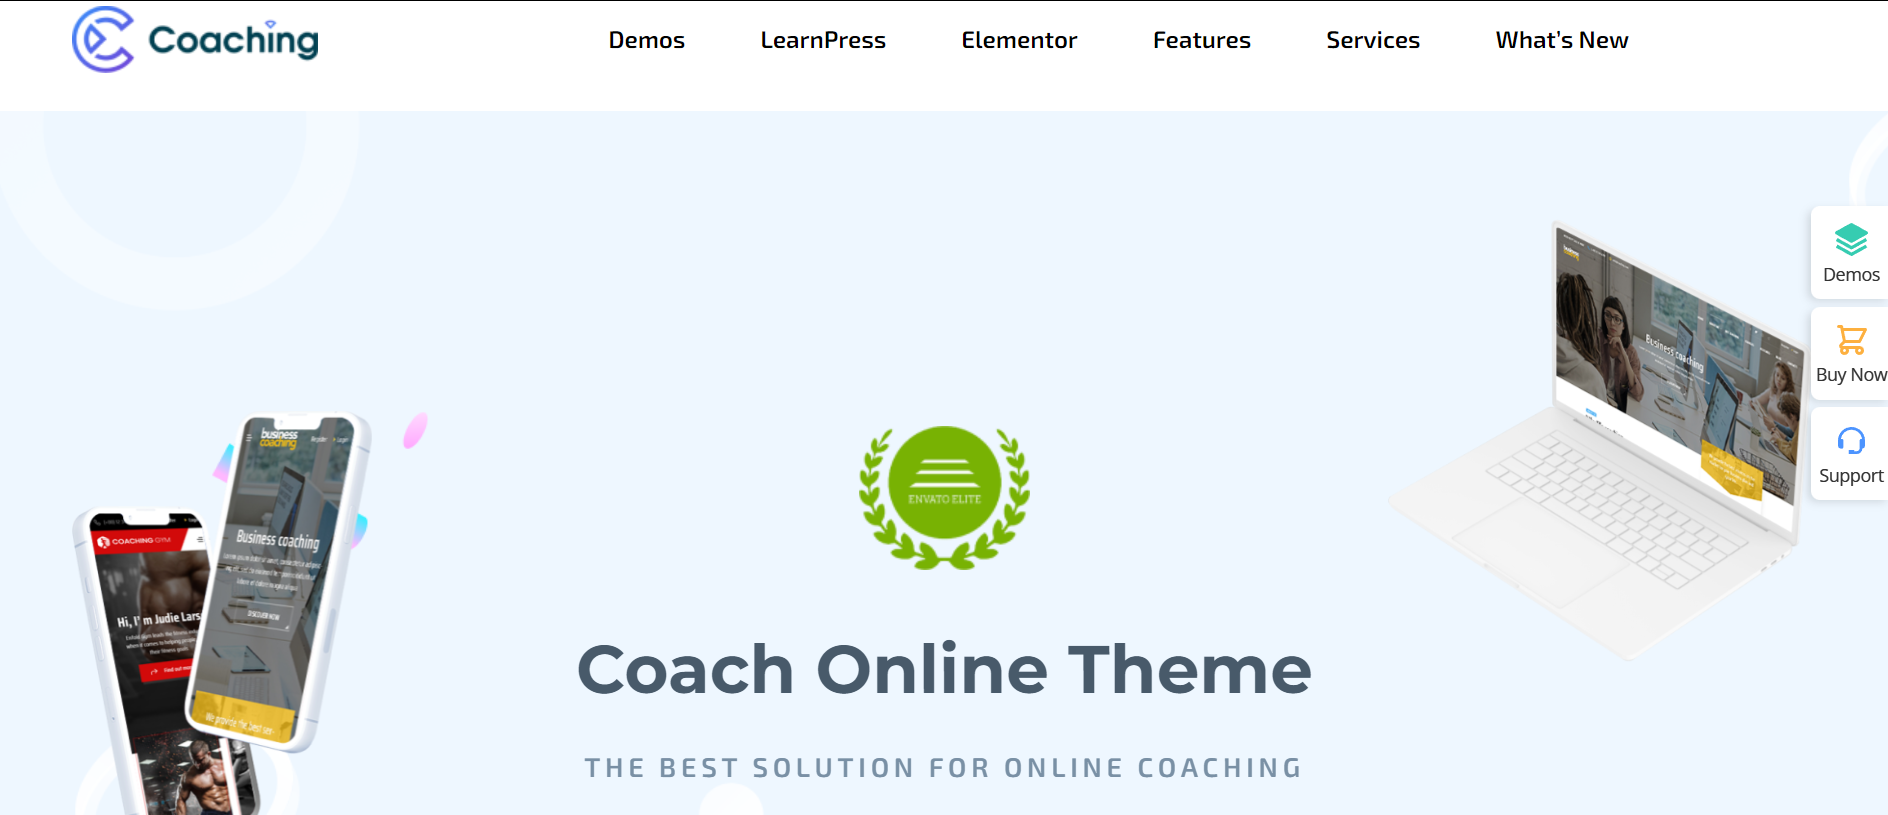 Coaching WP - WordPress Themes For Life Coaching Website